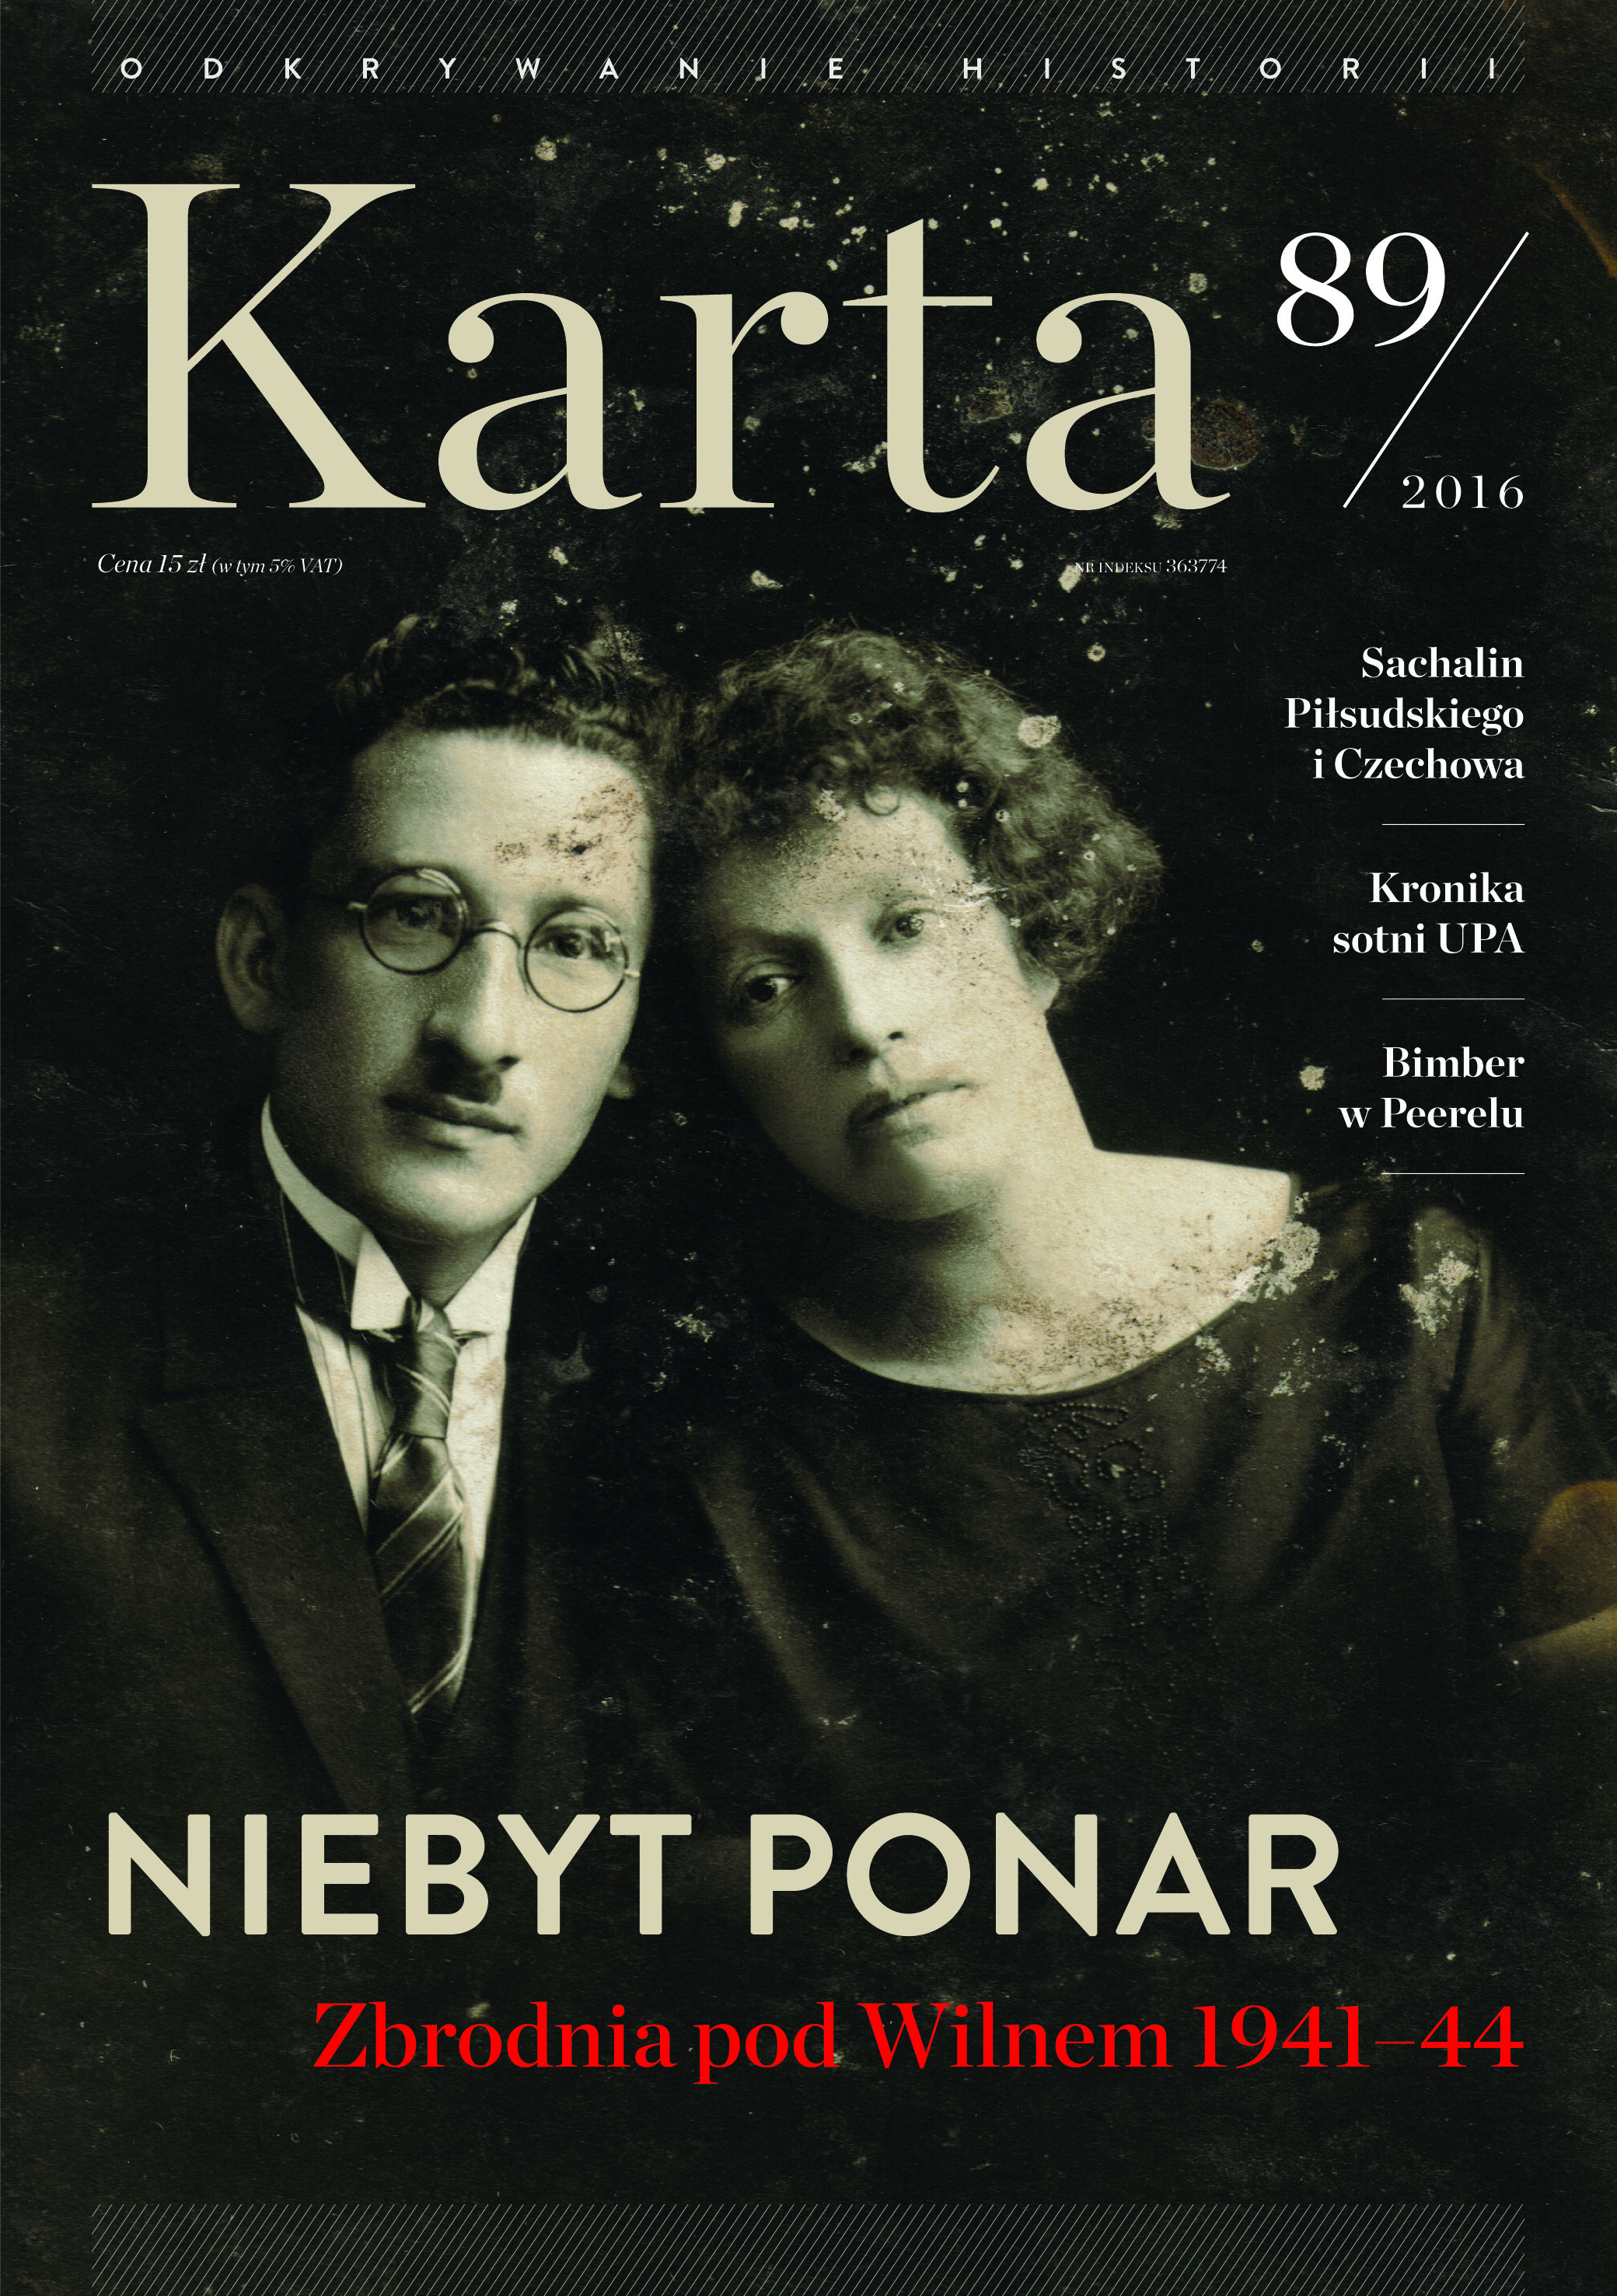 Ponary 1941-44 Cover Image